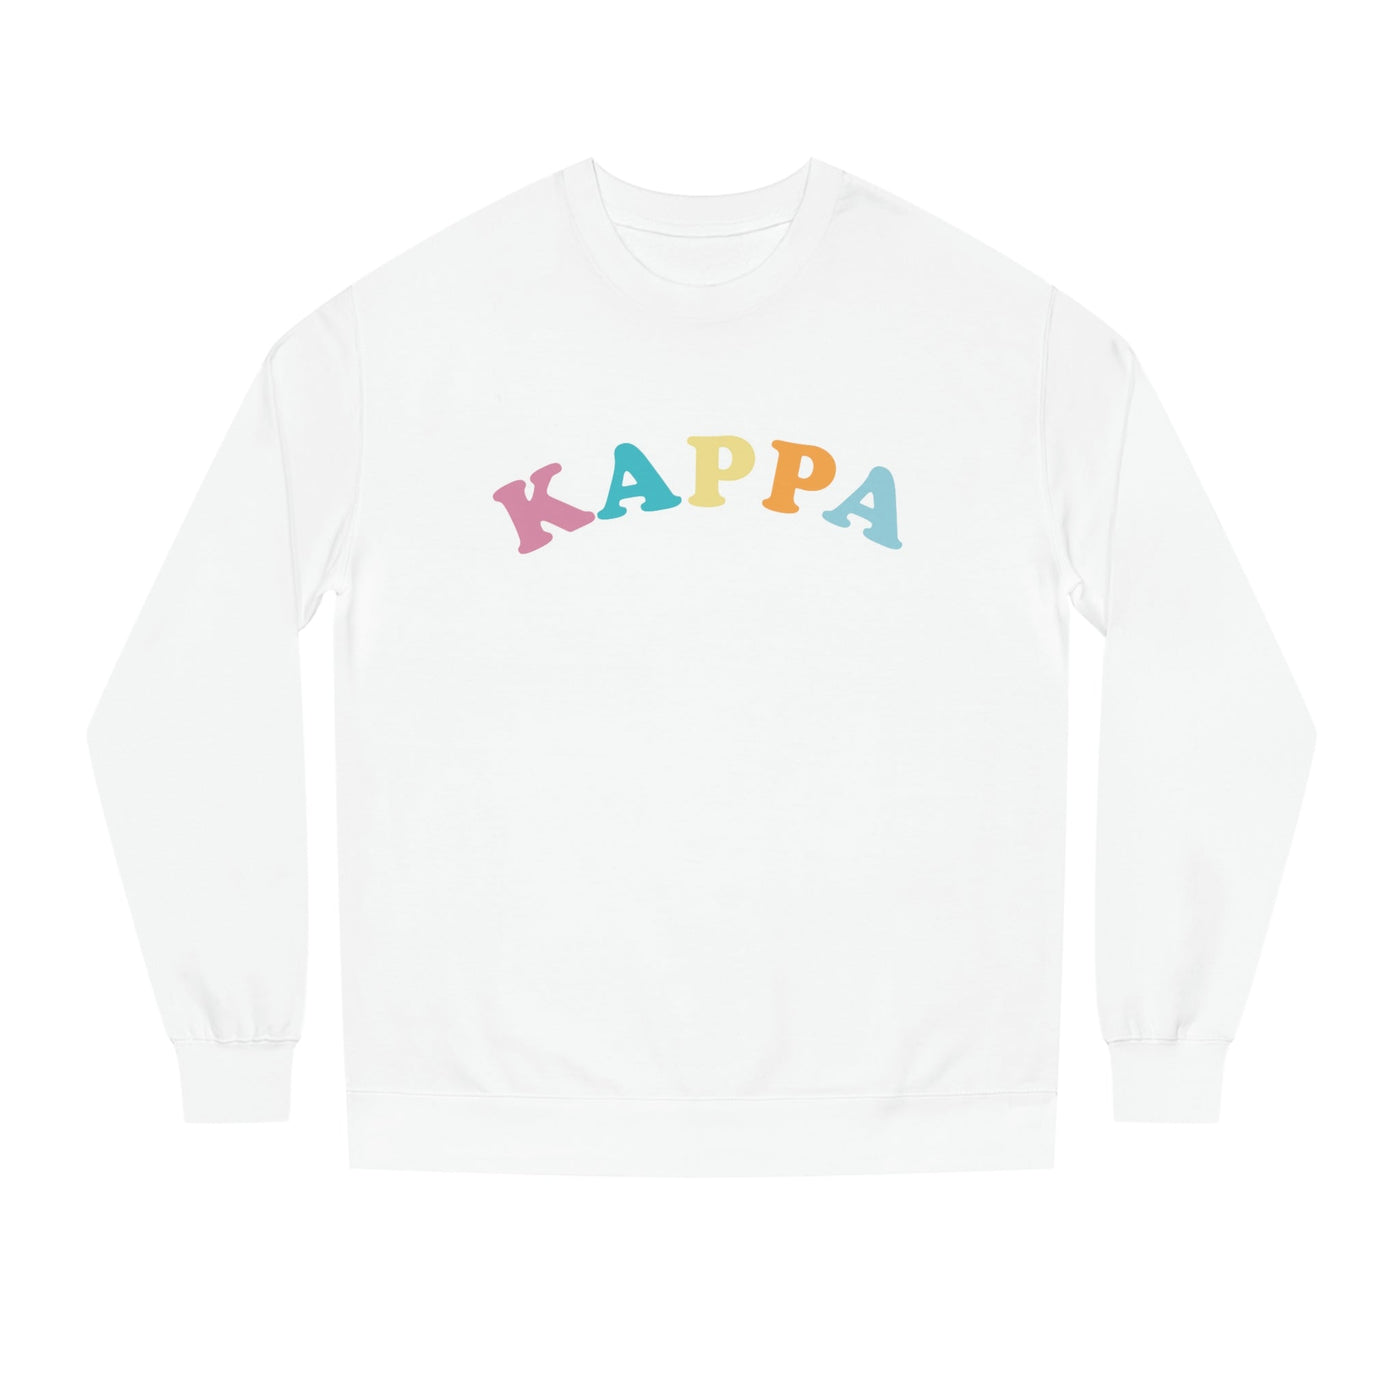 Kappa Kappa Gamma Colorful Text Cute KKG Sorority Crewneck Sweatshirt